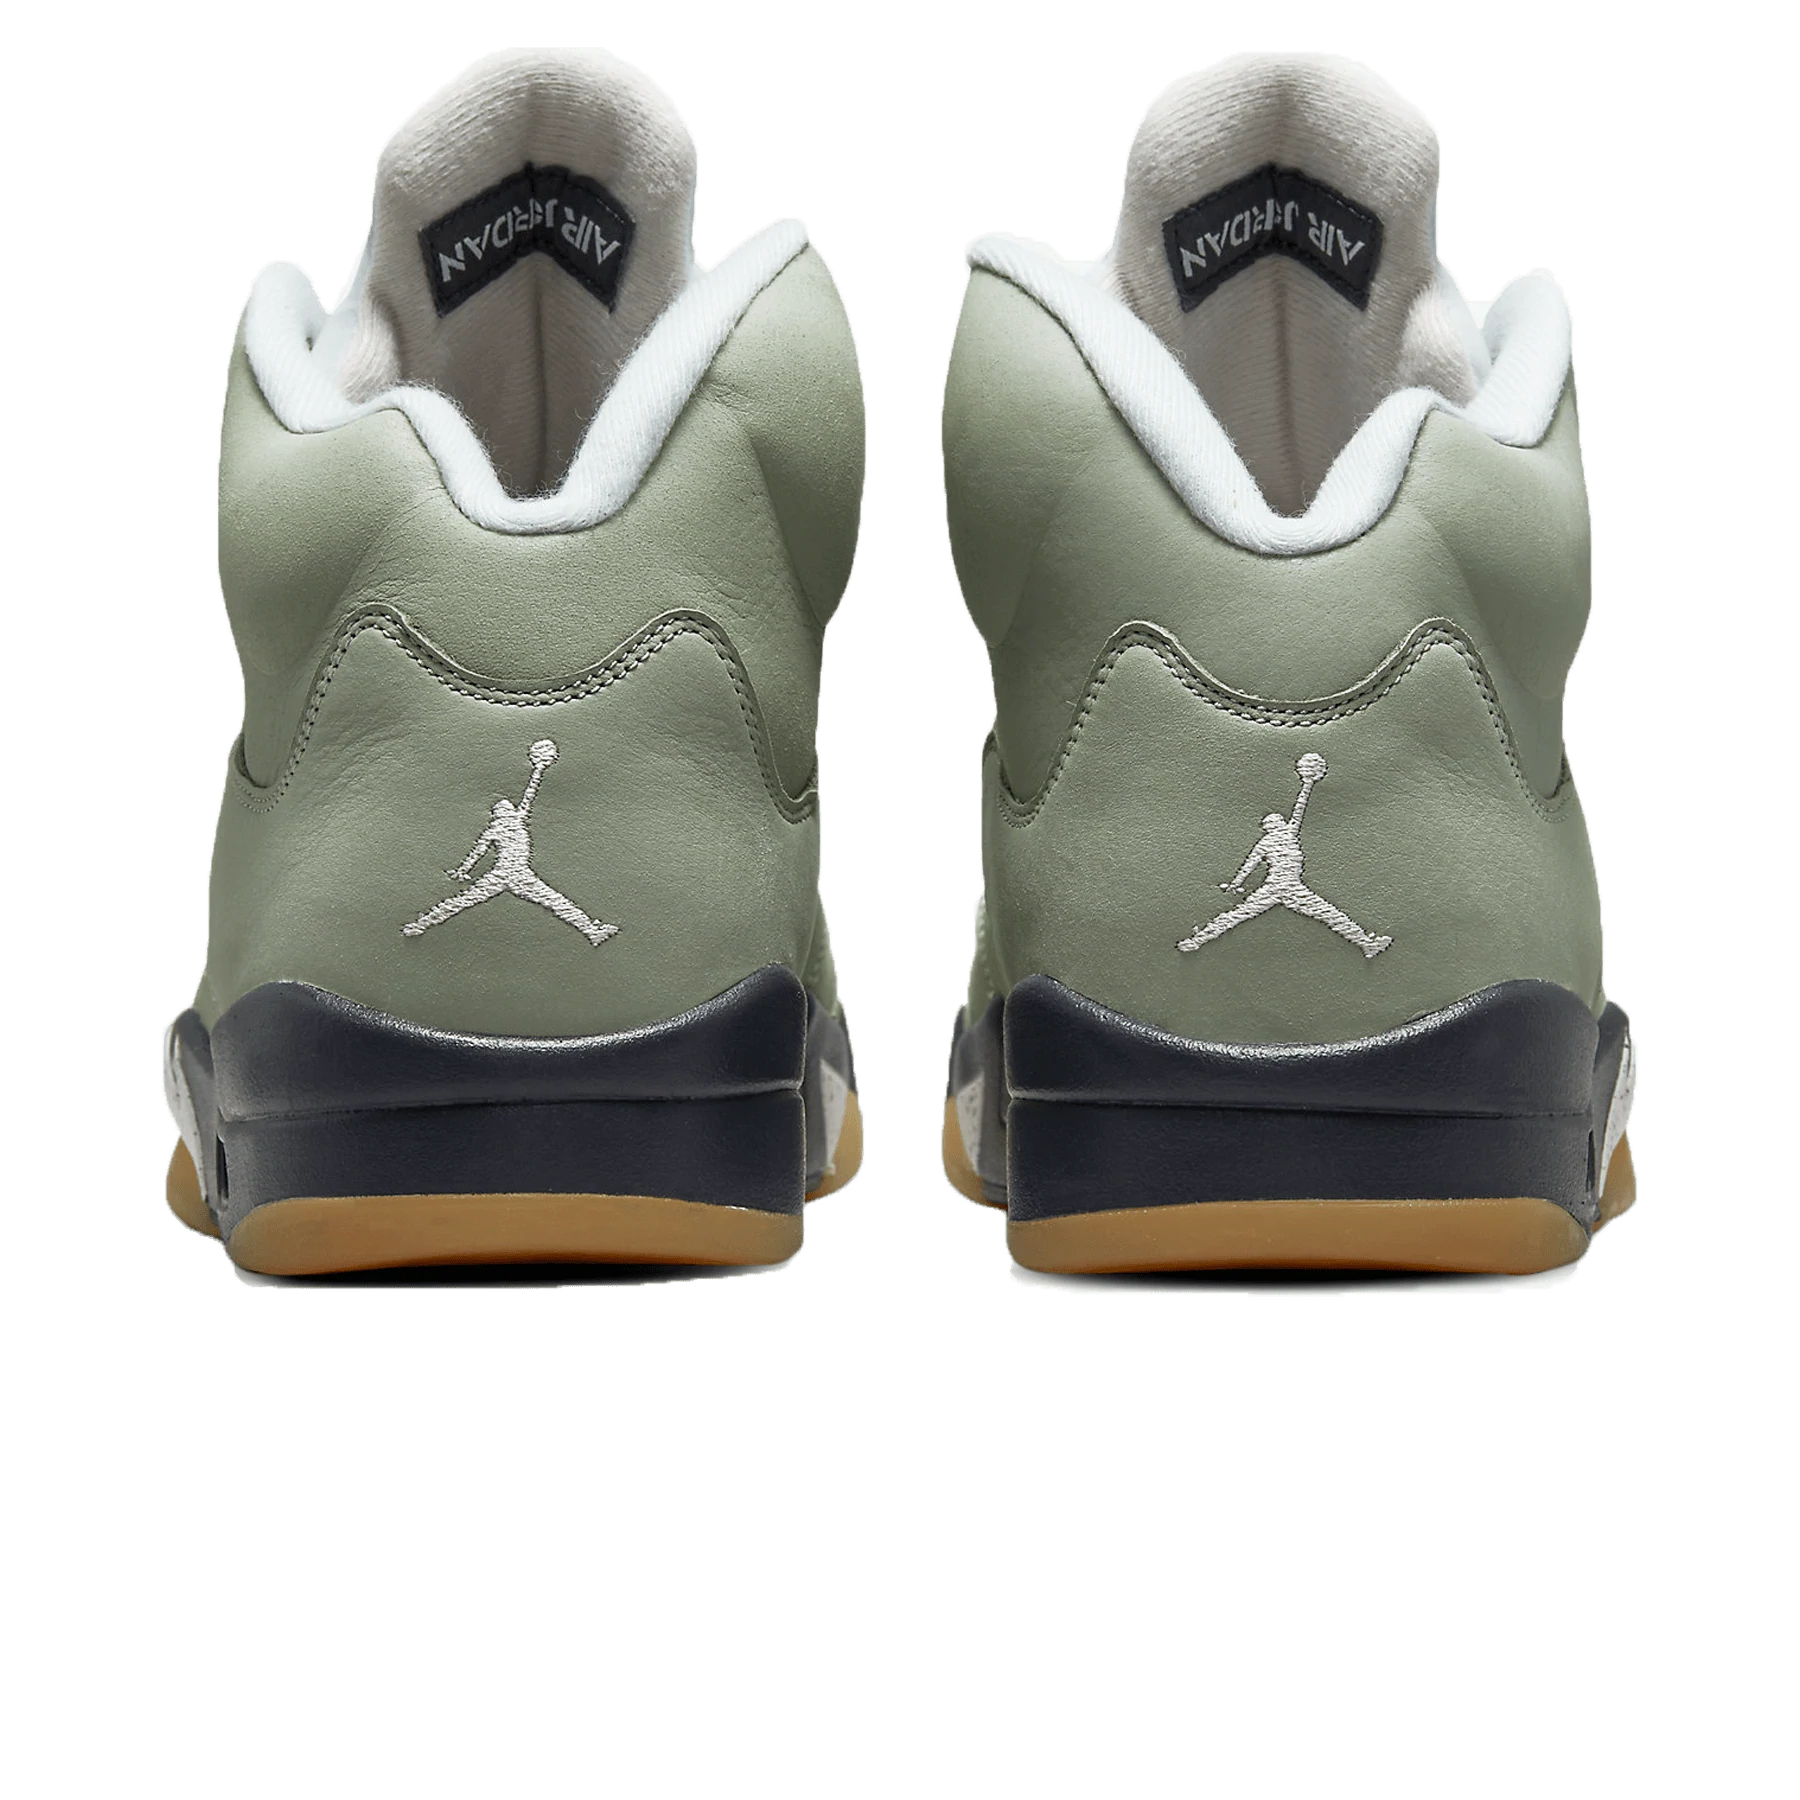 Double Boxed  299.99 Nike Air Jordan 5 Retro Jade Horizon Double Boxed